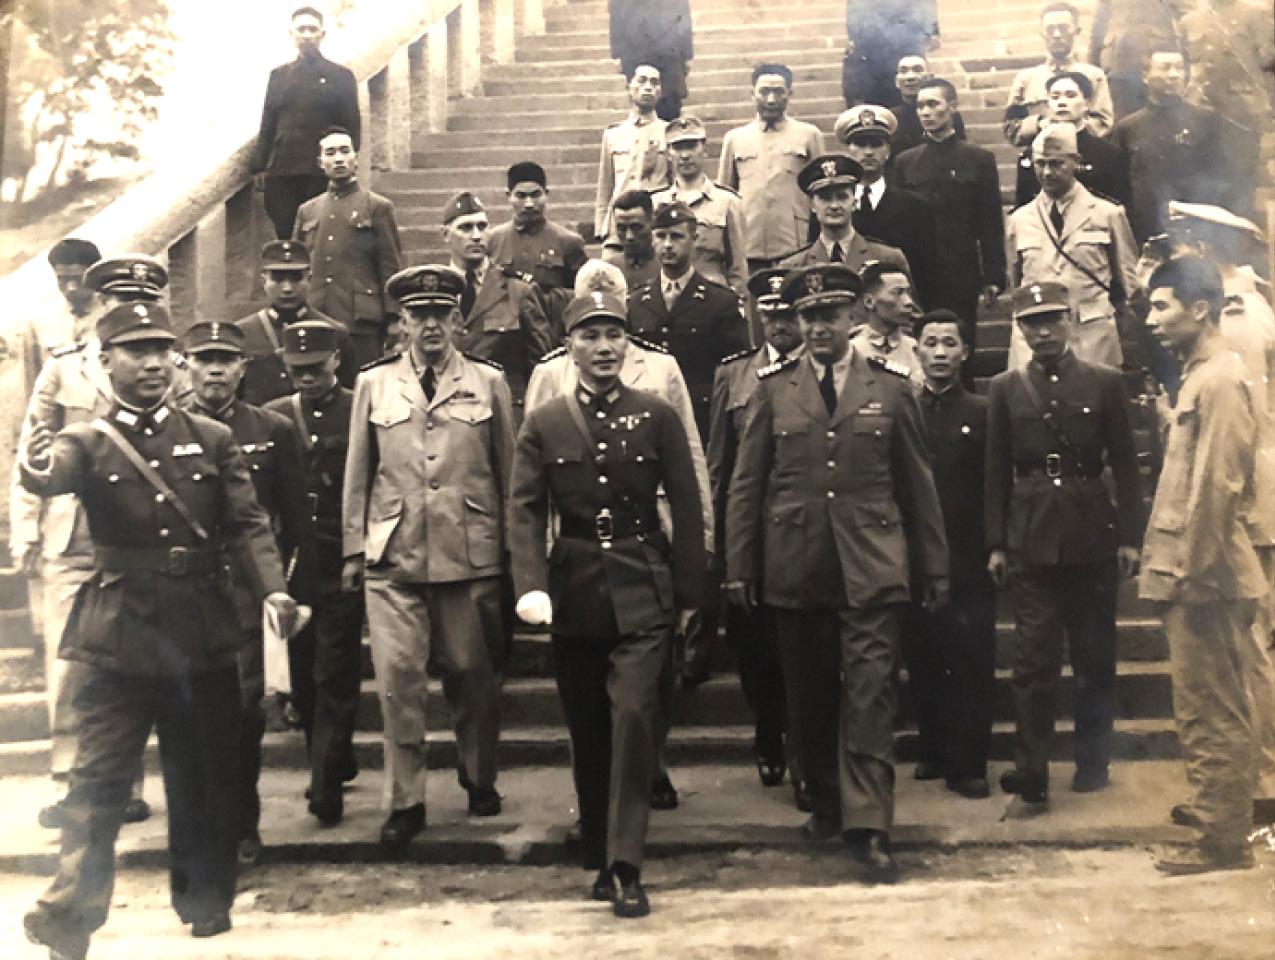 Photograph of Kuo Pin serving as Chiang Kai-shek’s security aide, circa 1945